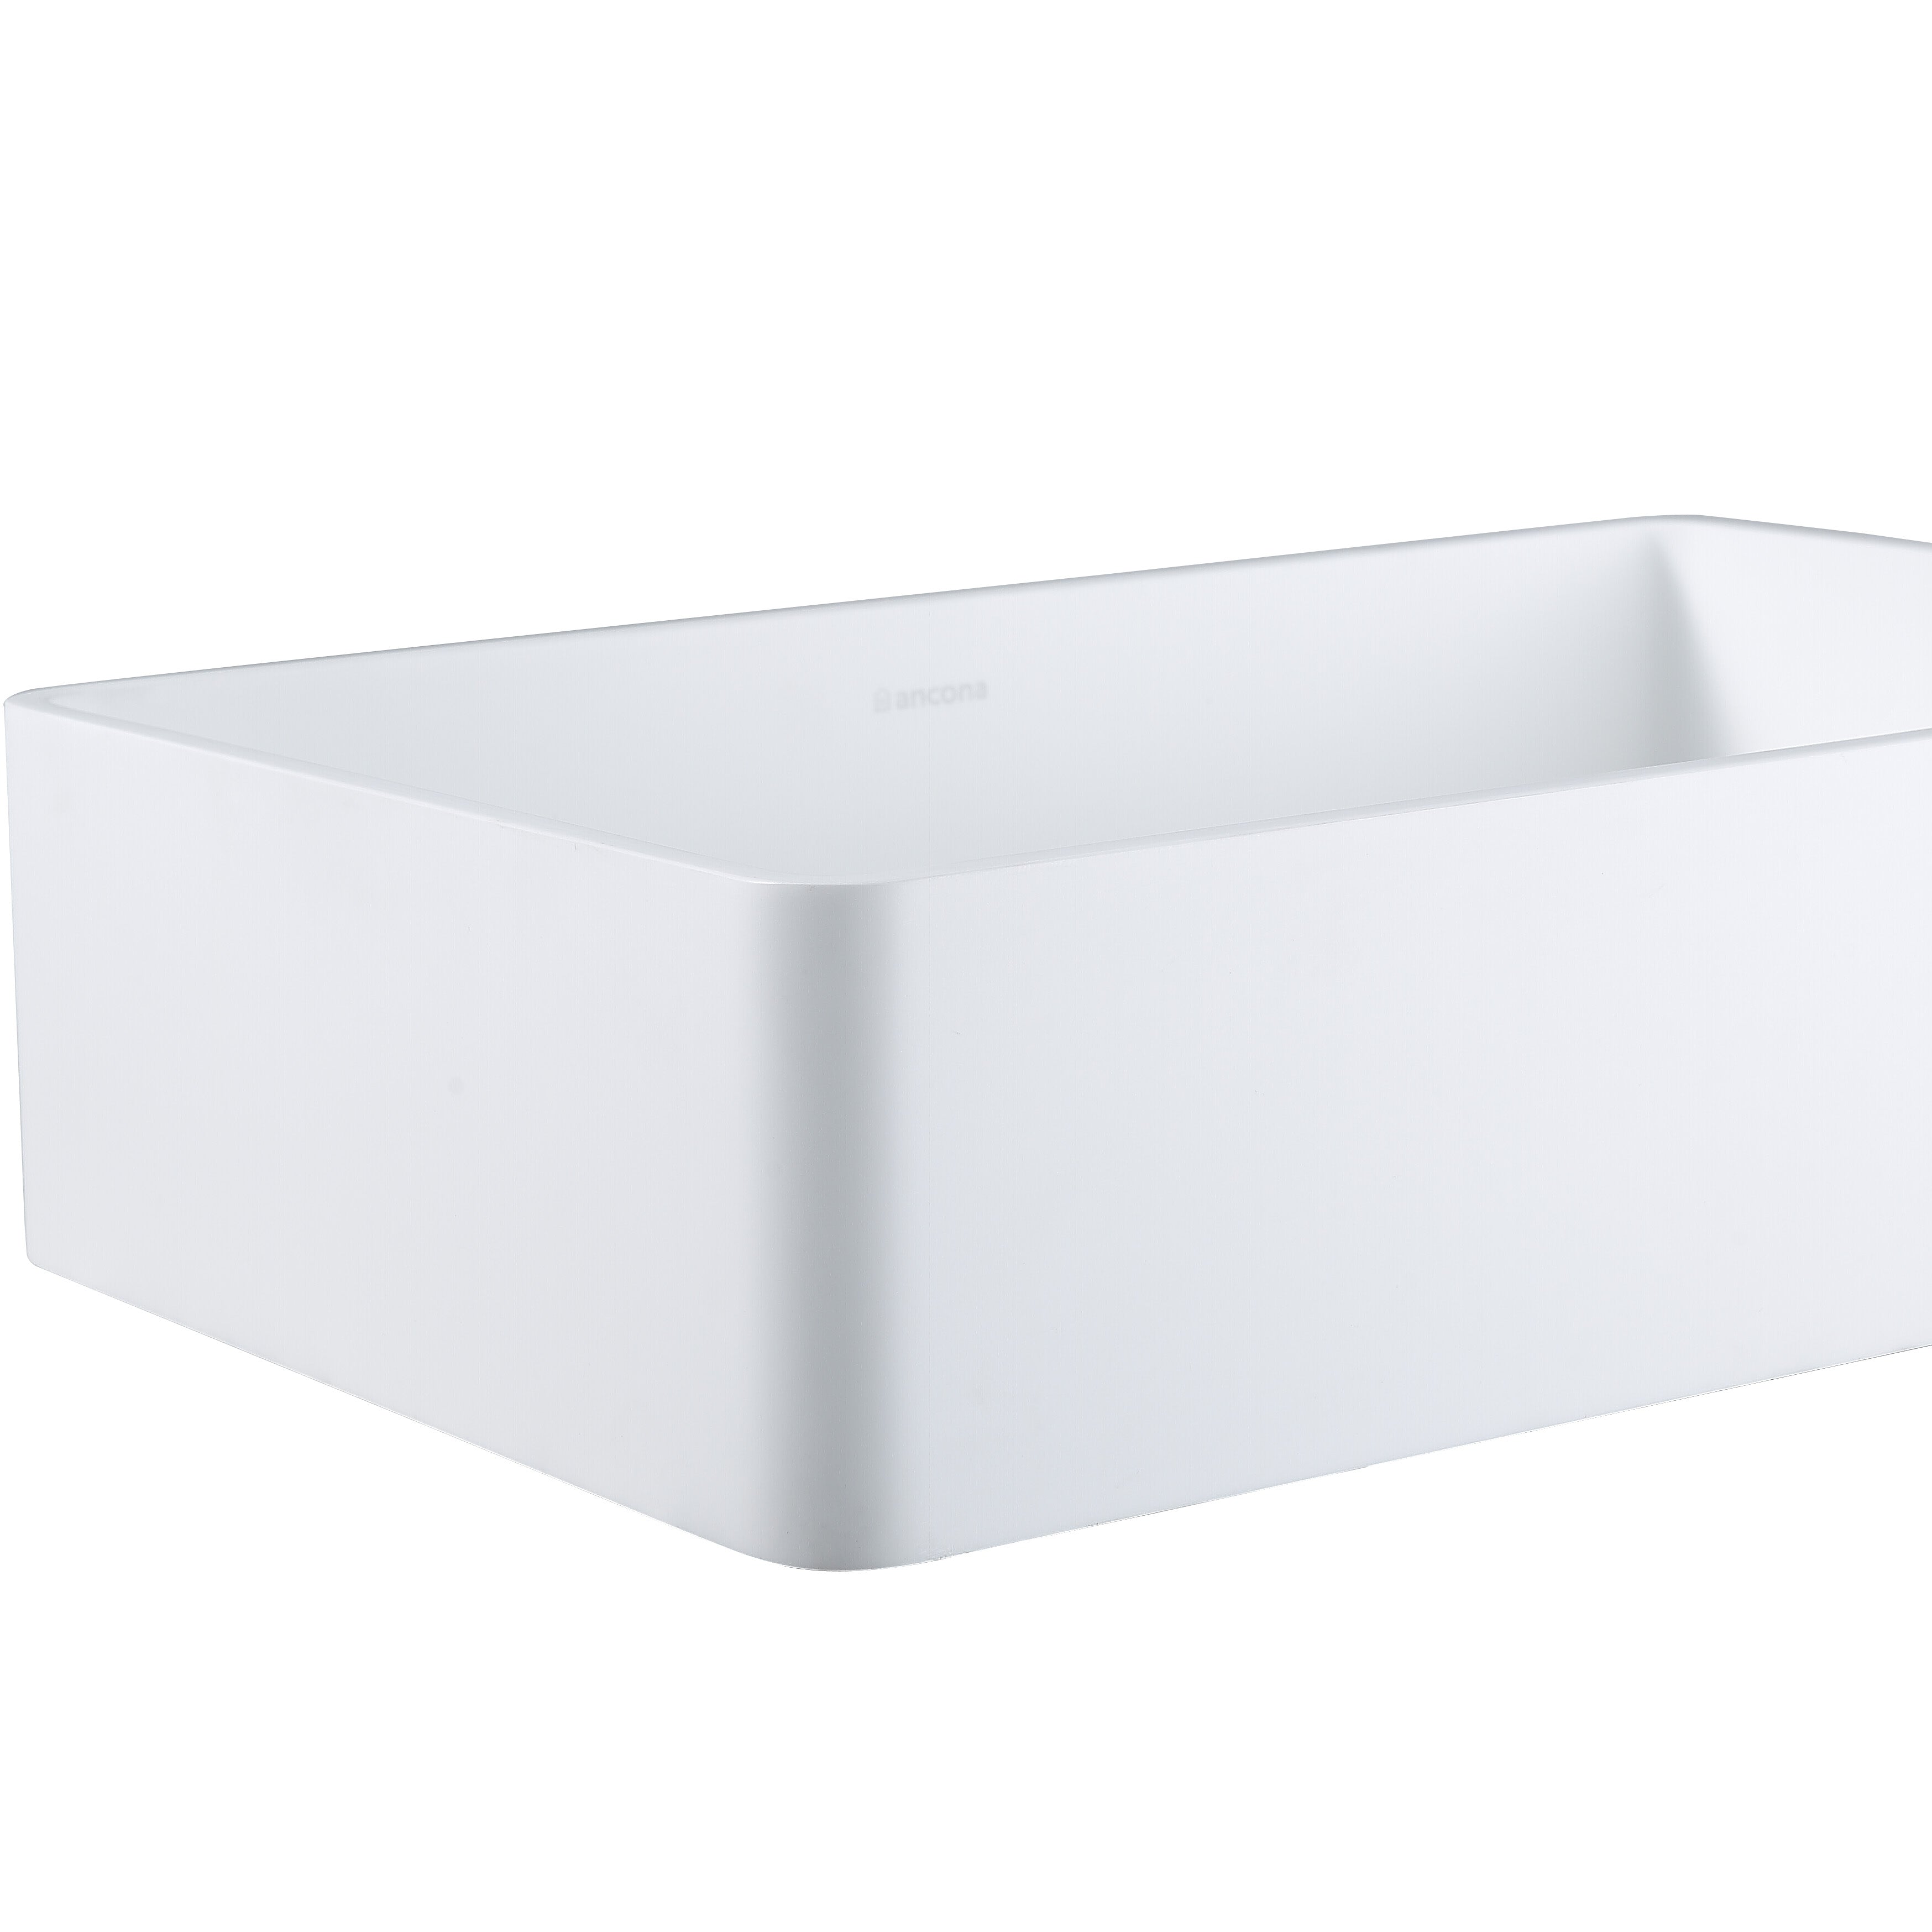 Ancona vasque de salle de bain Holbrook en blanc avec robinet Argenta pour vasque en chrome